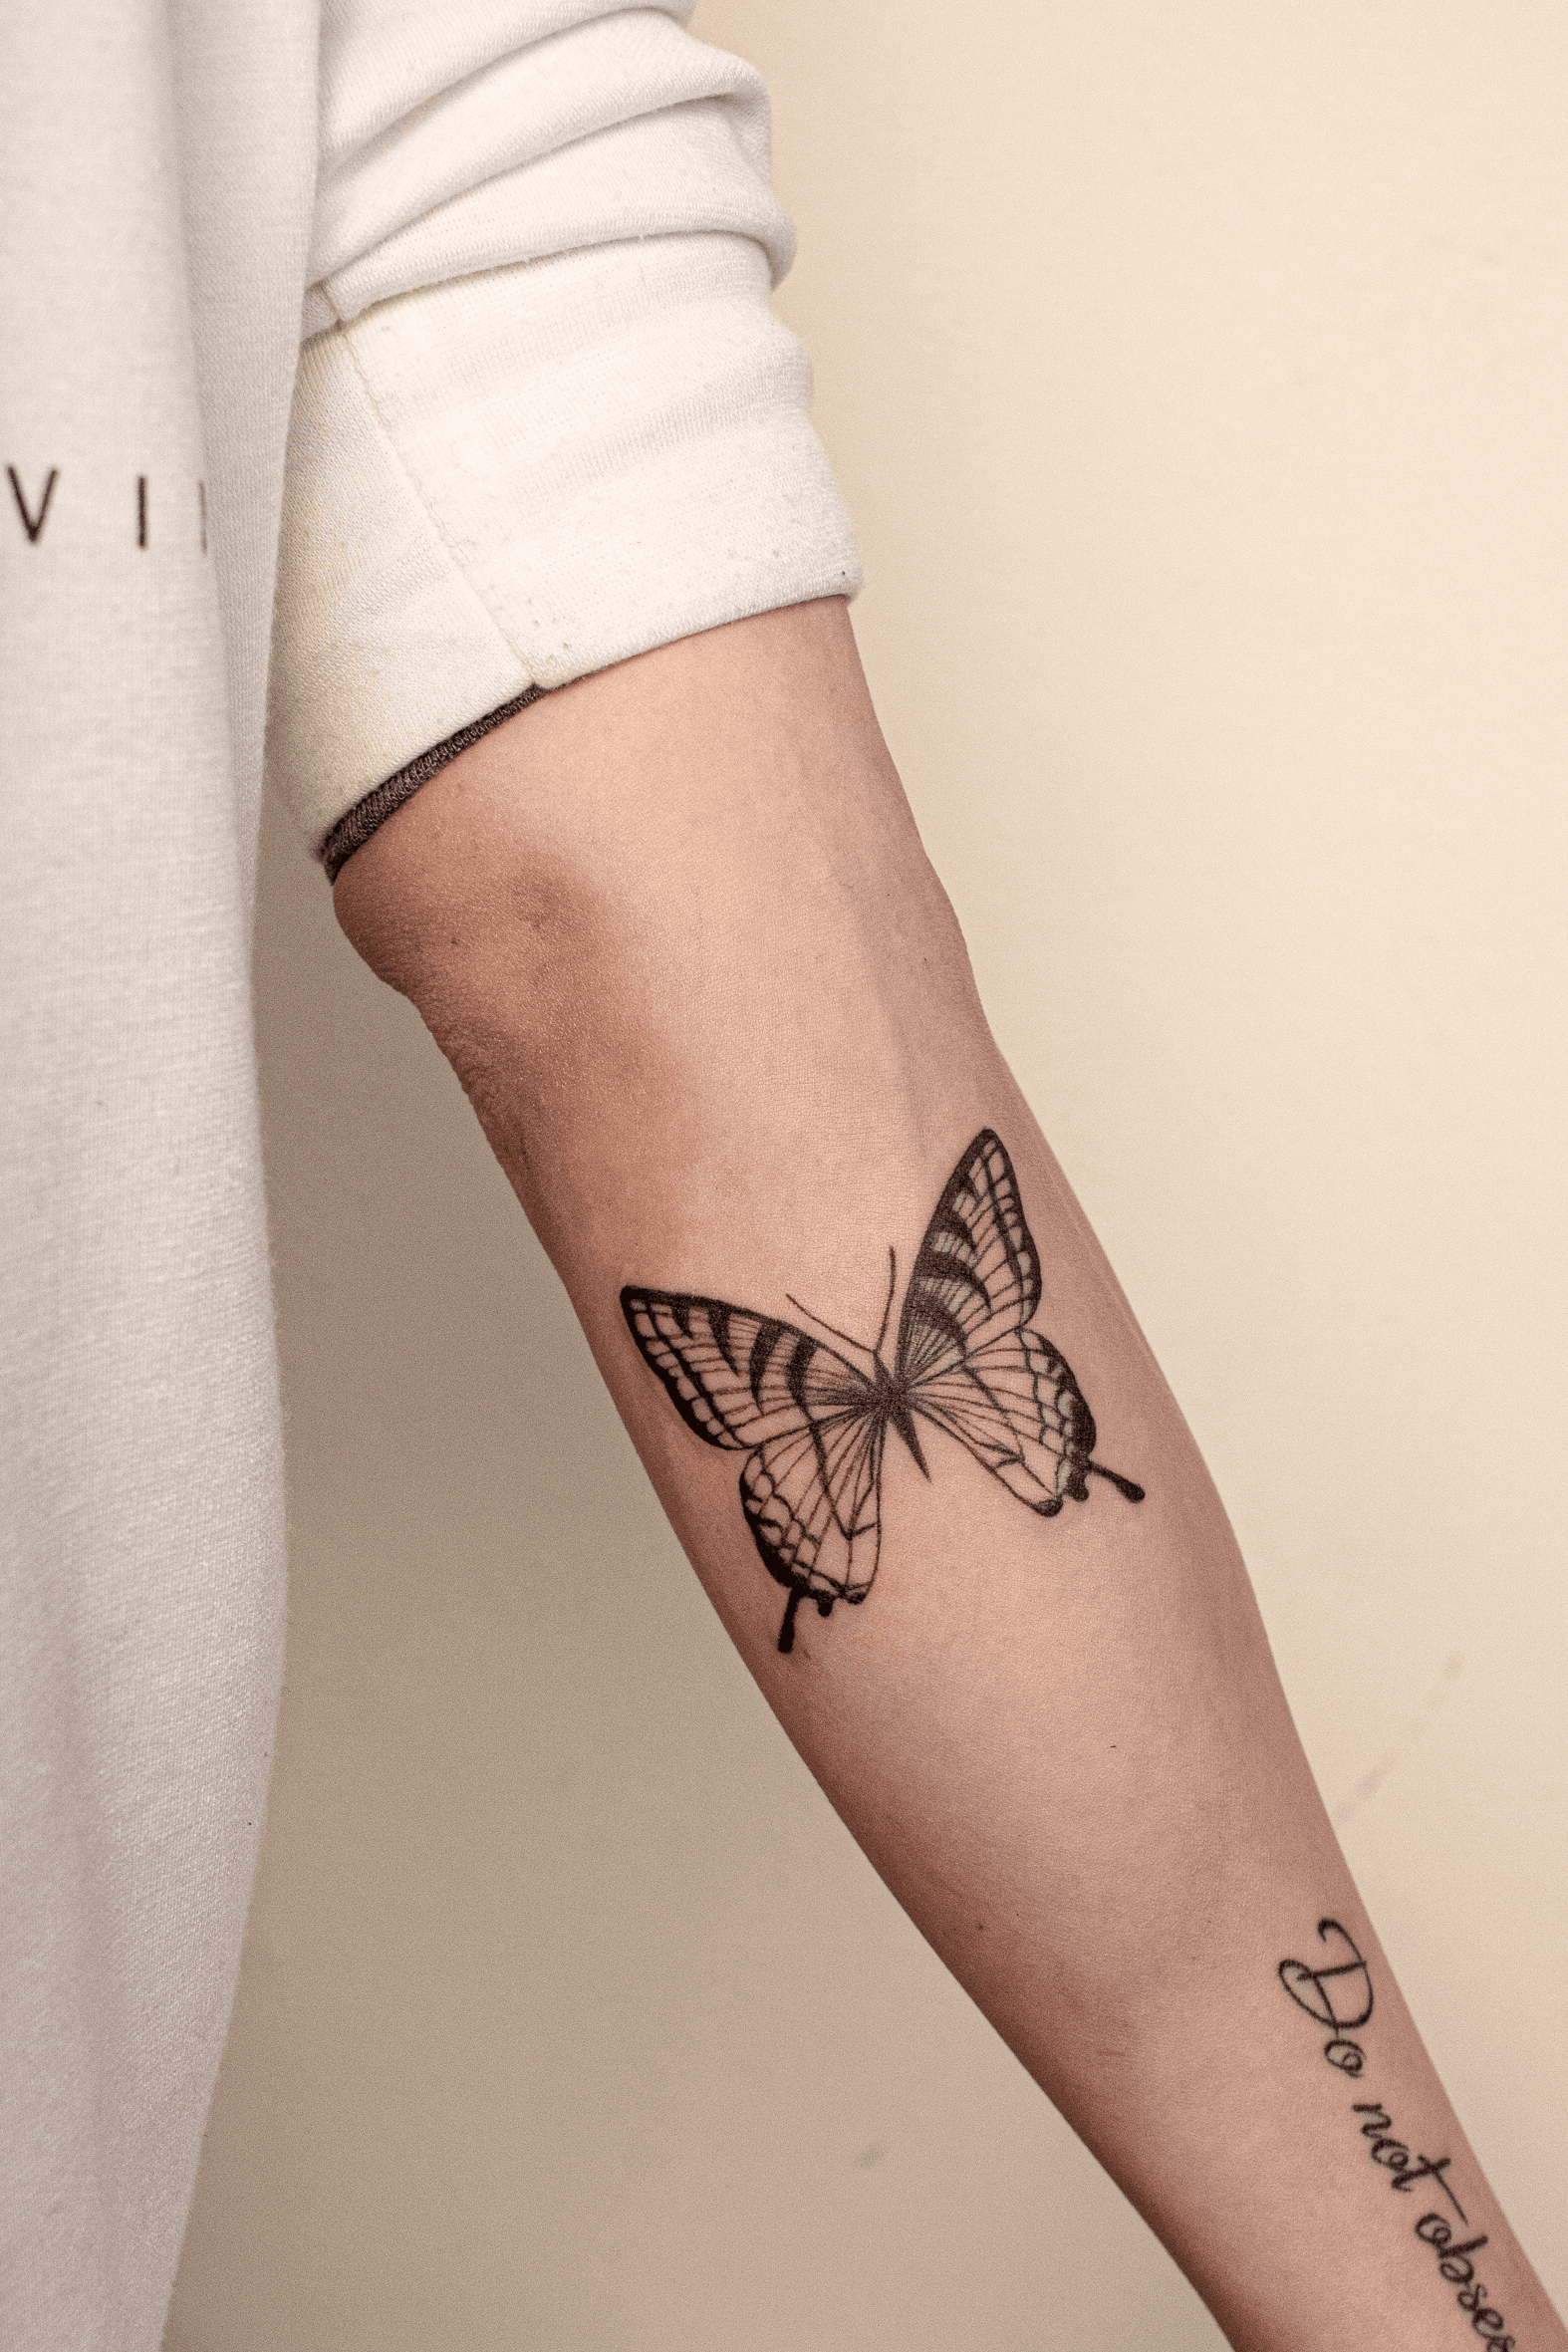 Tiny Dainty Fineline Black Butterfly Tattoo  Black butterfly tattoo  Tattoos Small tattoos